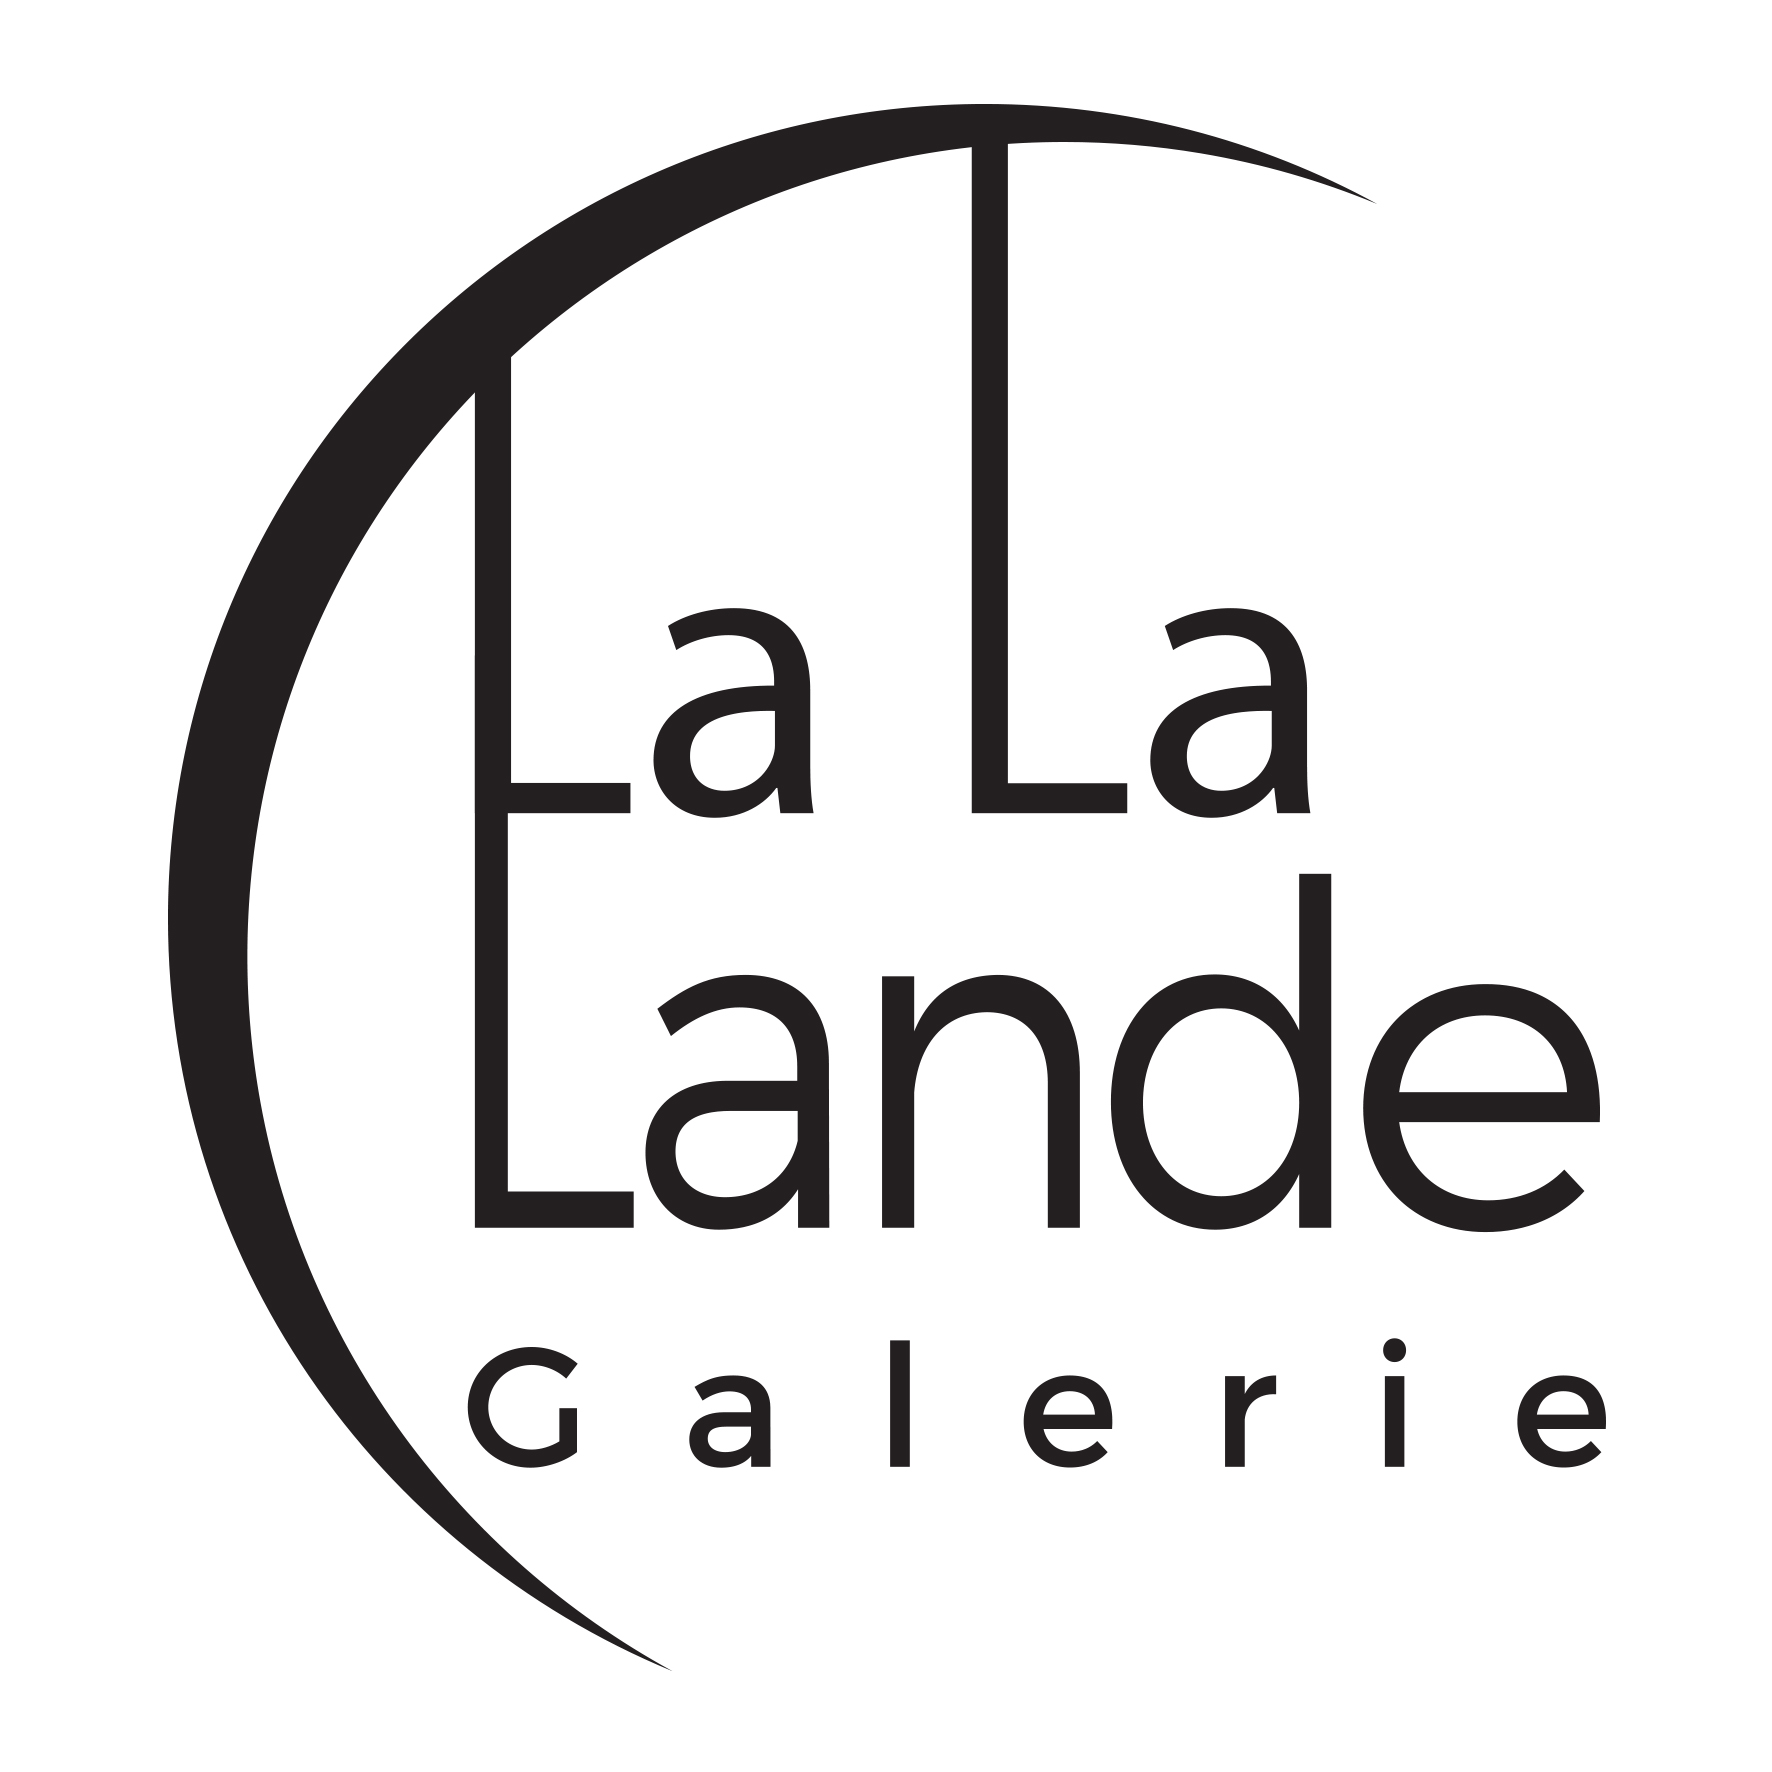 Galerie La La Lande